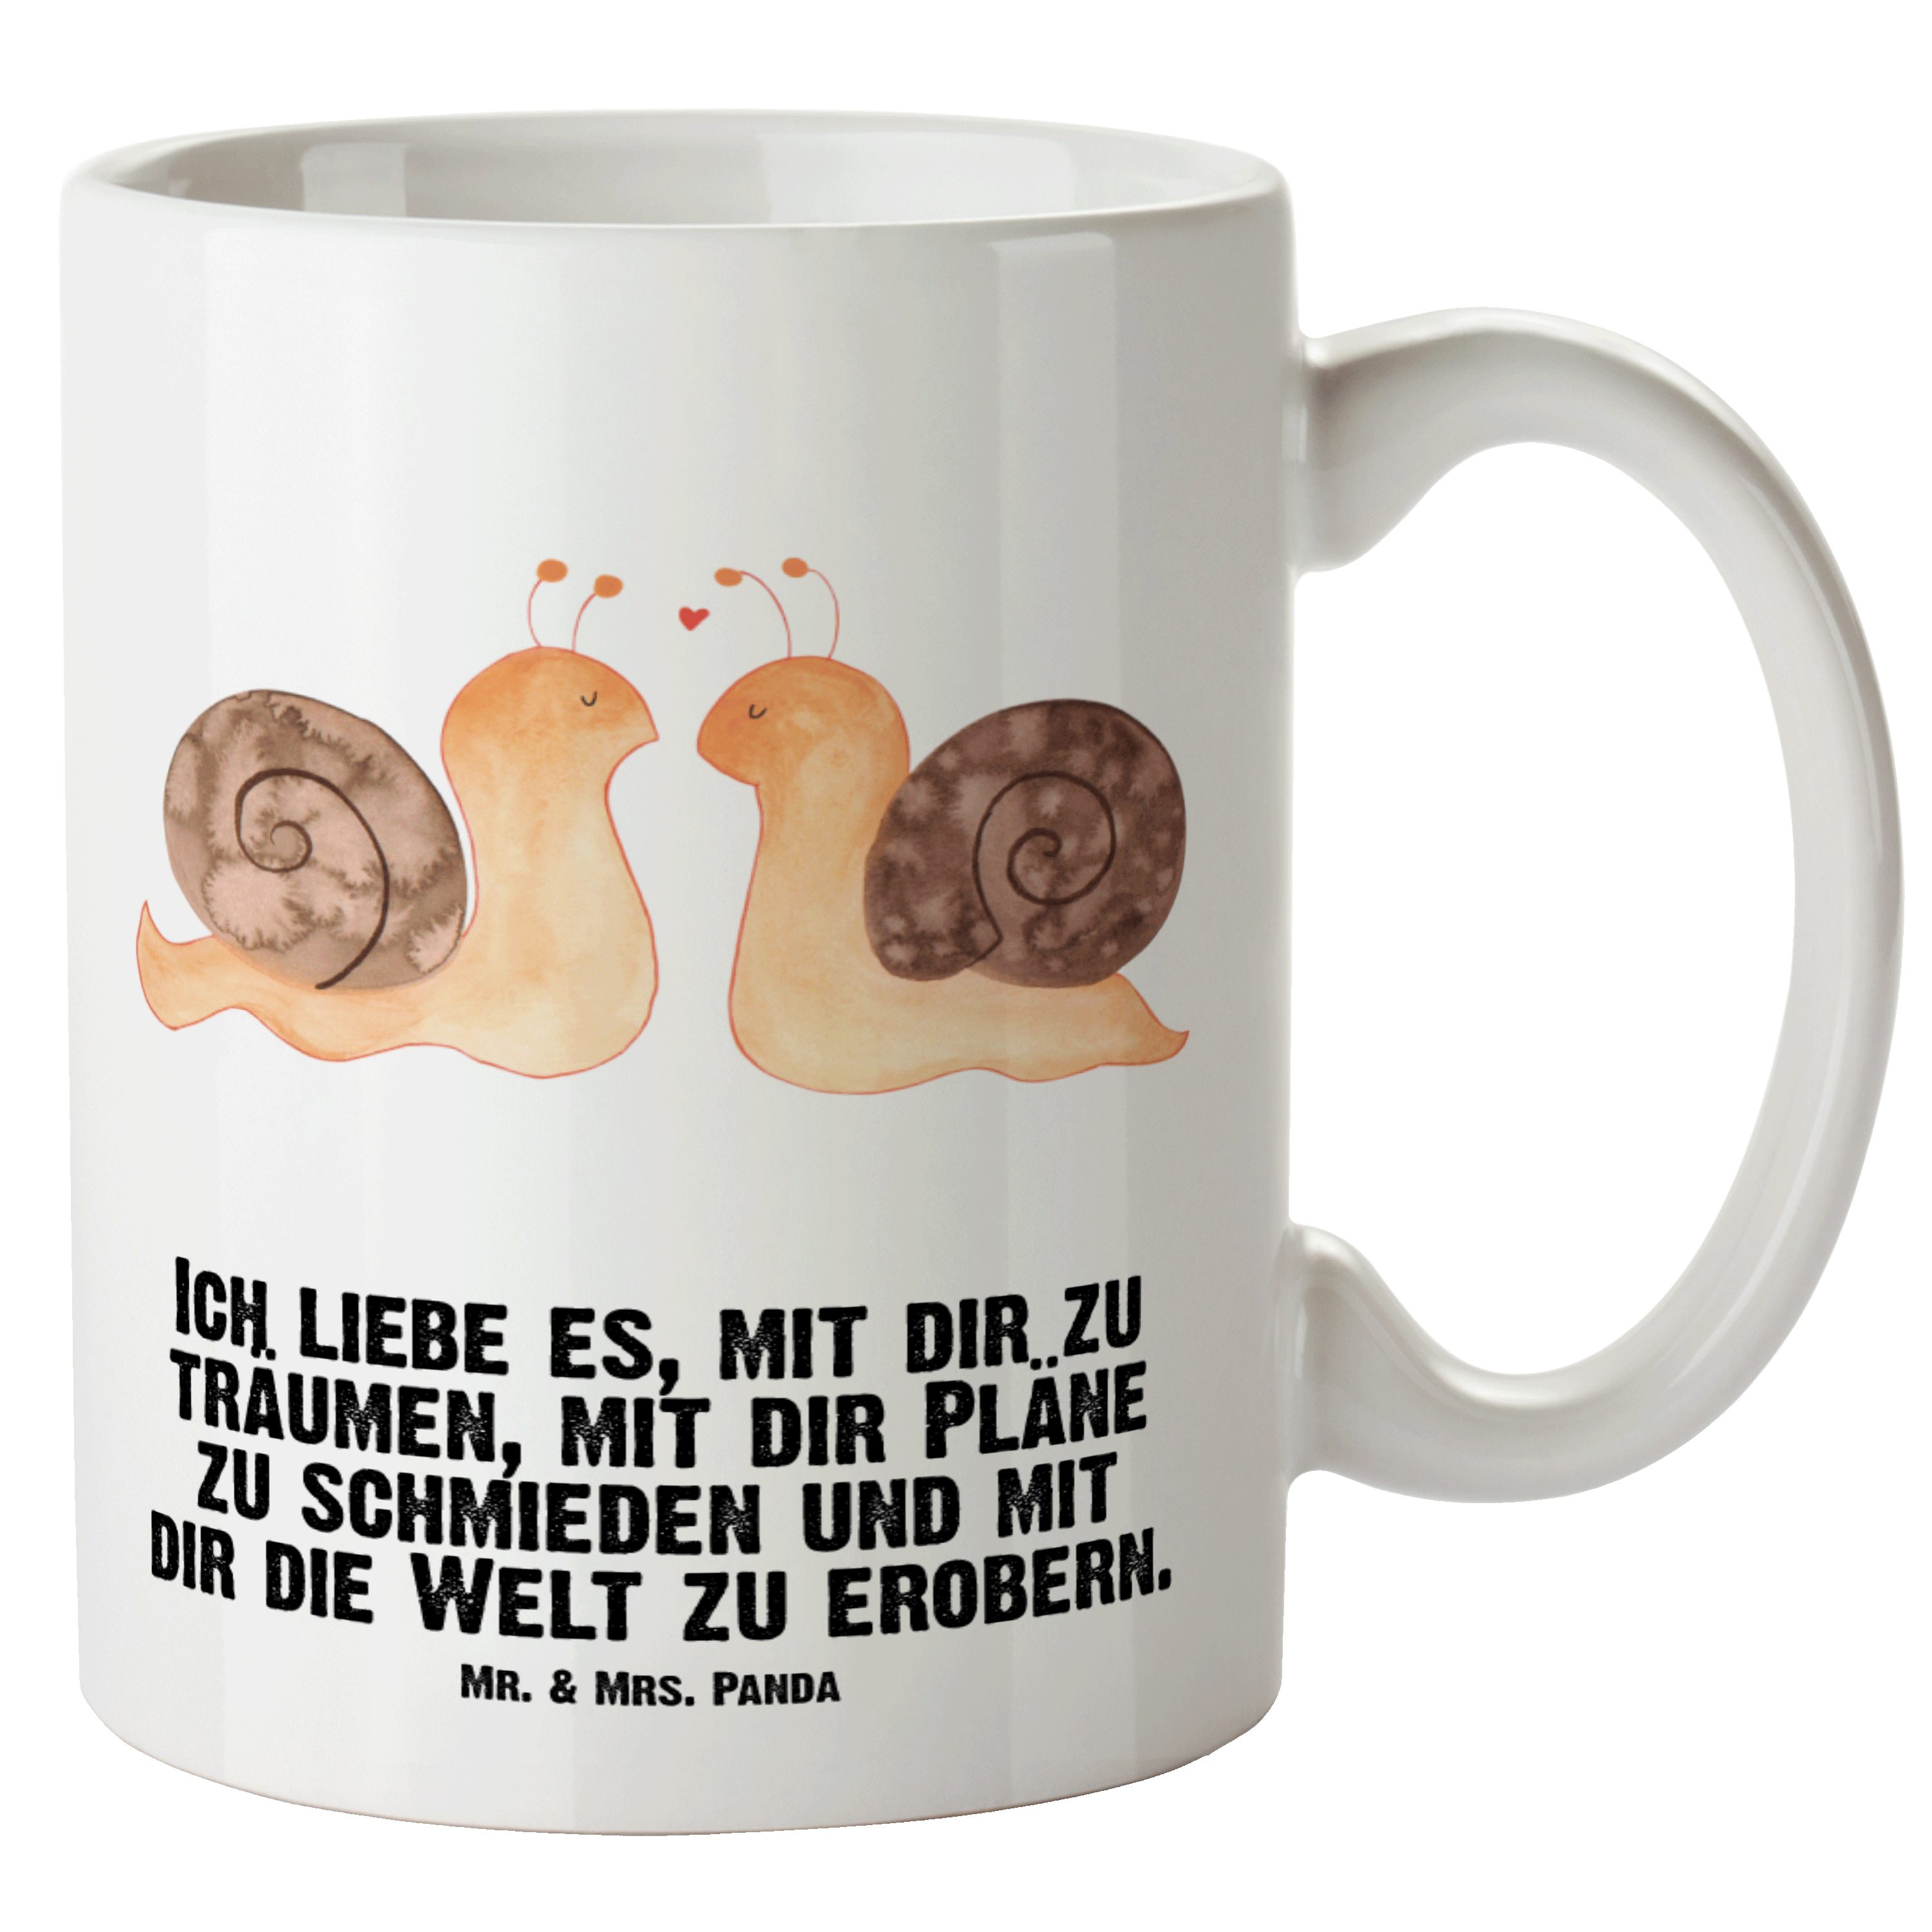 Kaffee, Tasse XL Grosse Schnecken Tasse - Mrs. Panda Becher, Freundin, - Mr. Liebe Keramik & XL Weiß Geschenk,